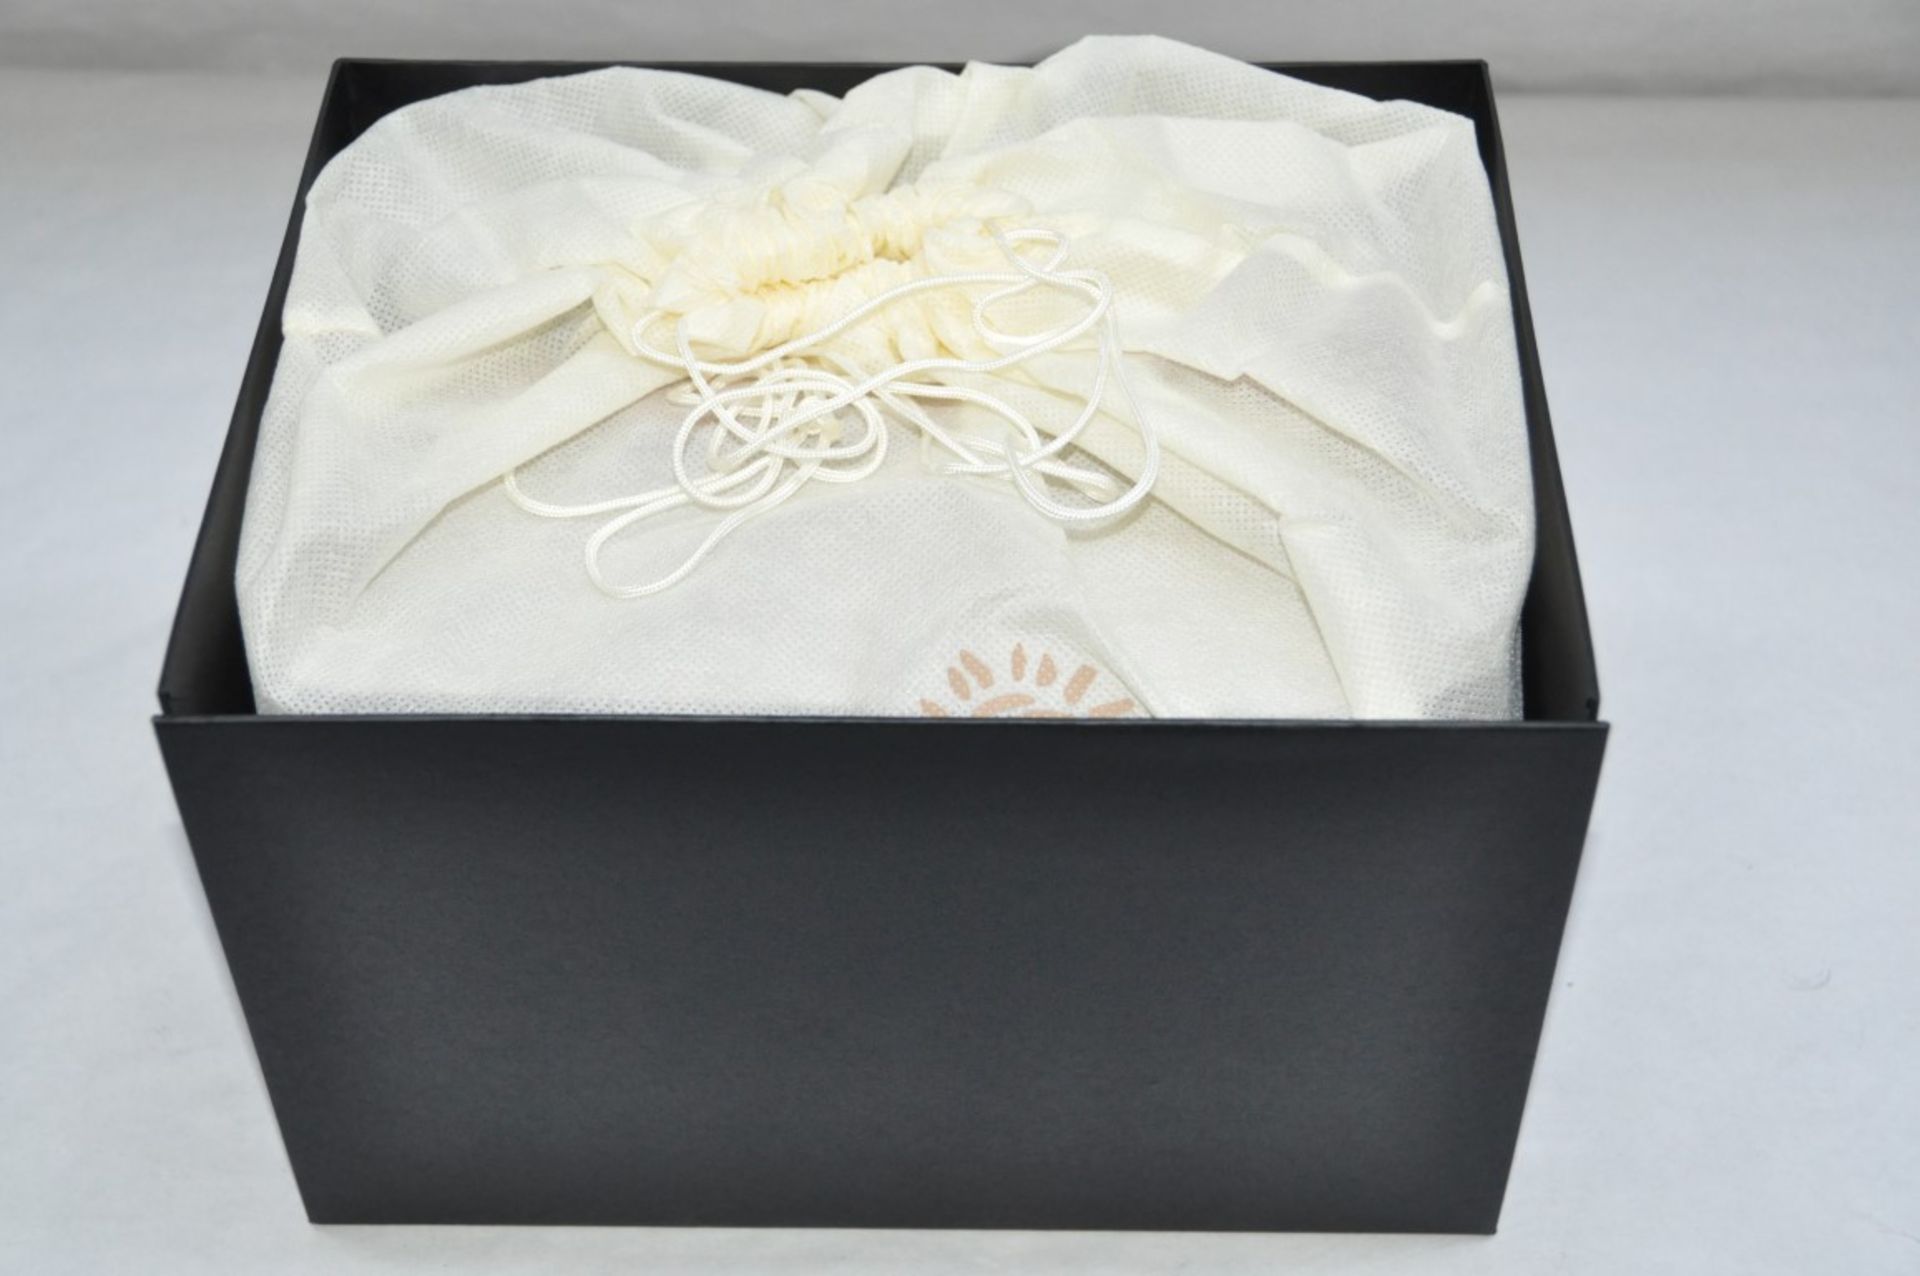 1 x "AB Collezioni" Italian Genuine Suede-Lined Luxury "Epoque" Jewellery Box (E130B) - Ref: LT000 - - Image 5 of 6